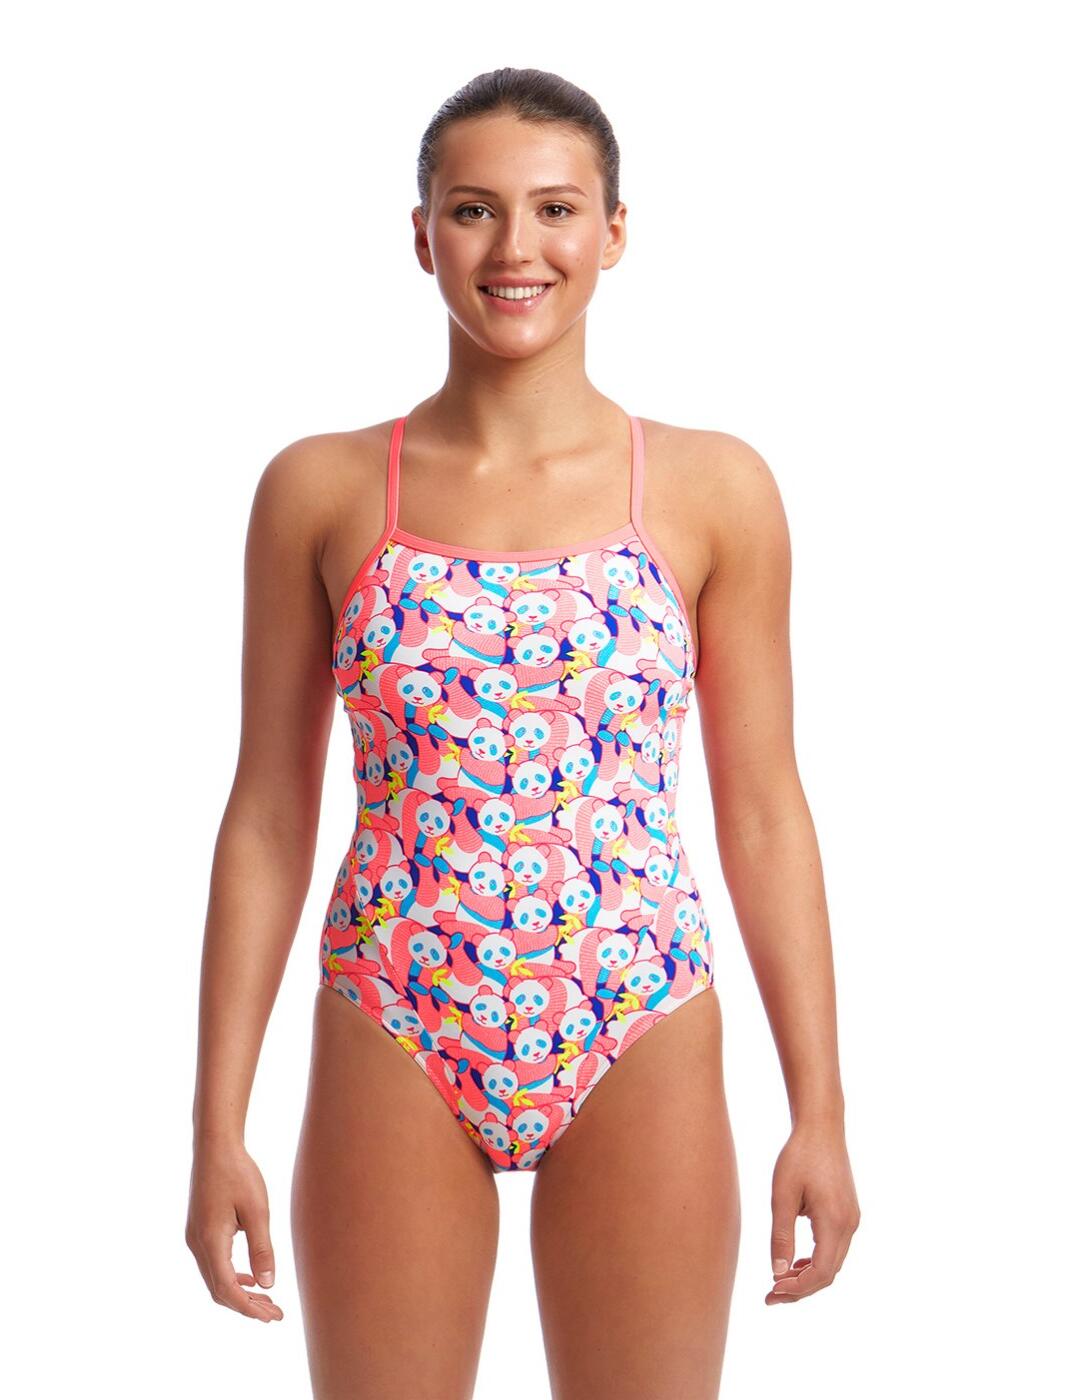 FKS030L Funkita Ladies Eco Single Strap One Piece Swimsuit - FKS030L02328 Pink Panda